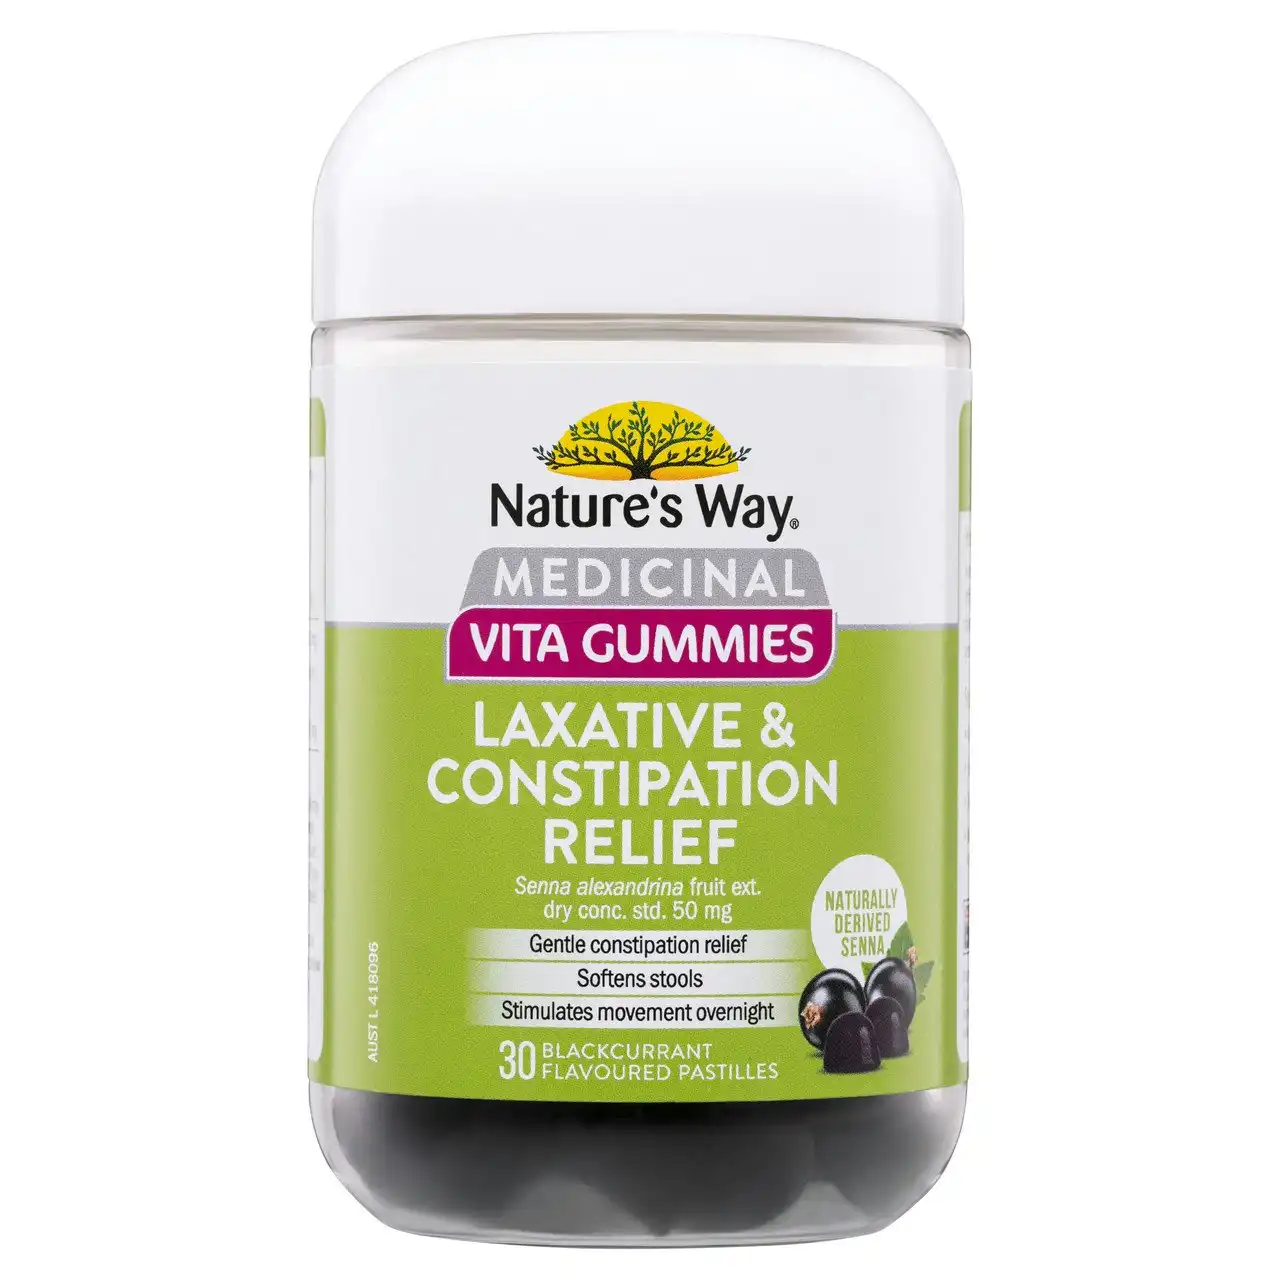 Nature's Way Medicinal Vita Gummies Laxative & Constipation Relief 30's